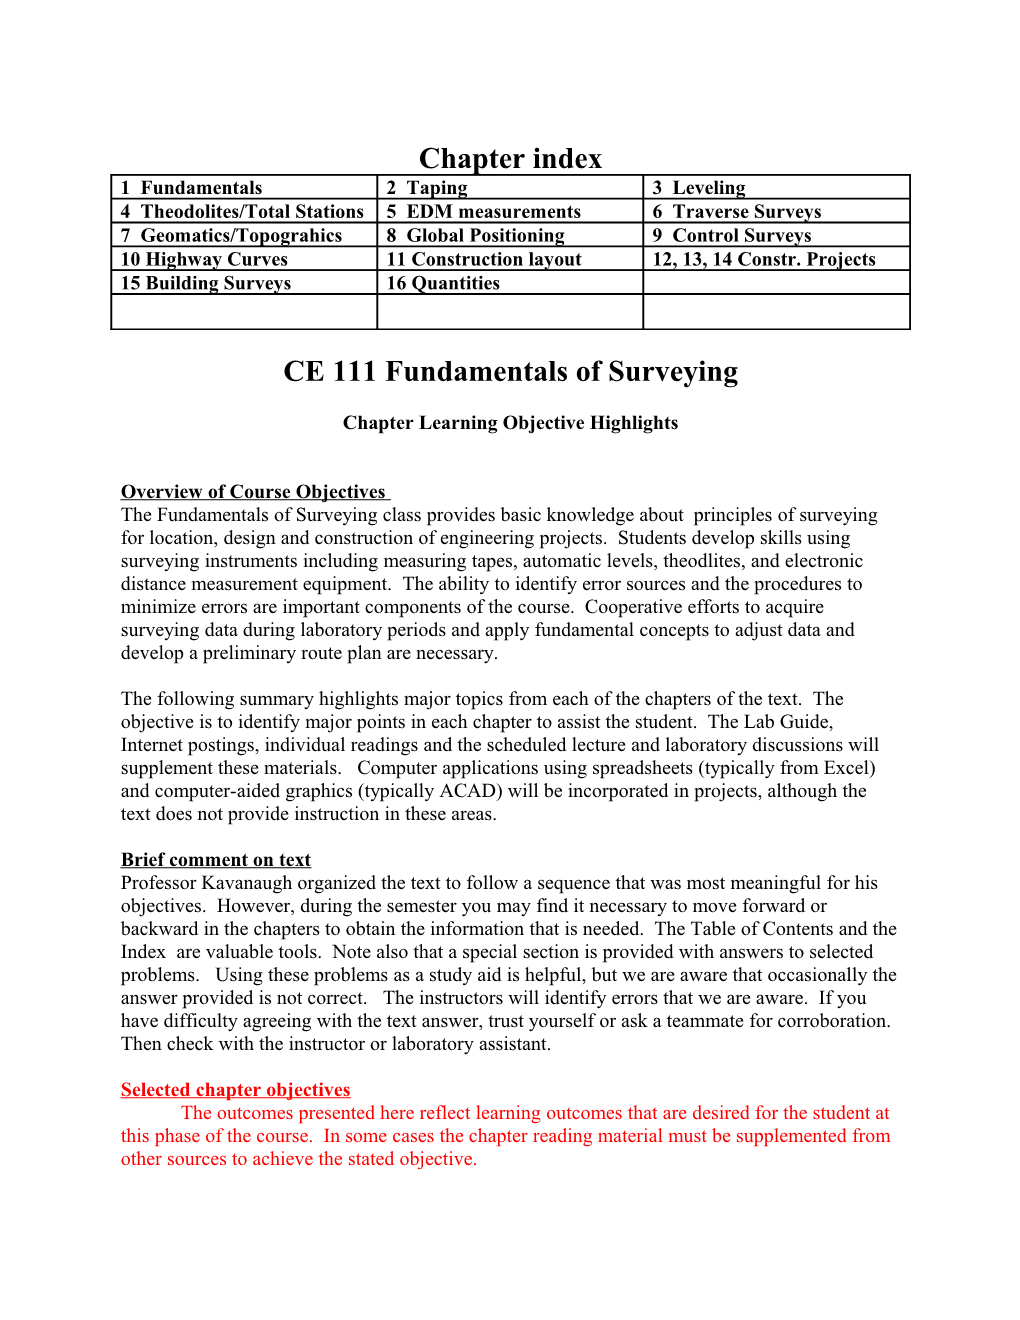 CE 111 Fundamentals of Surveying